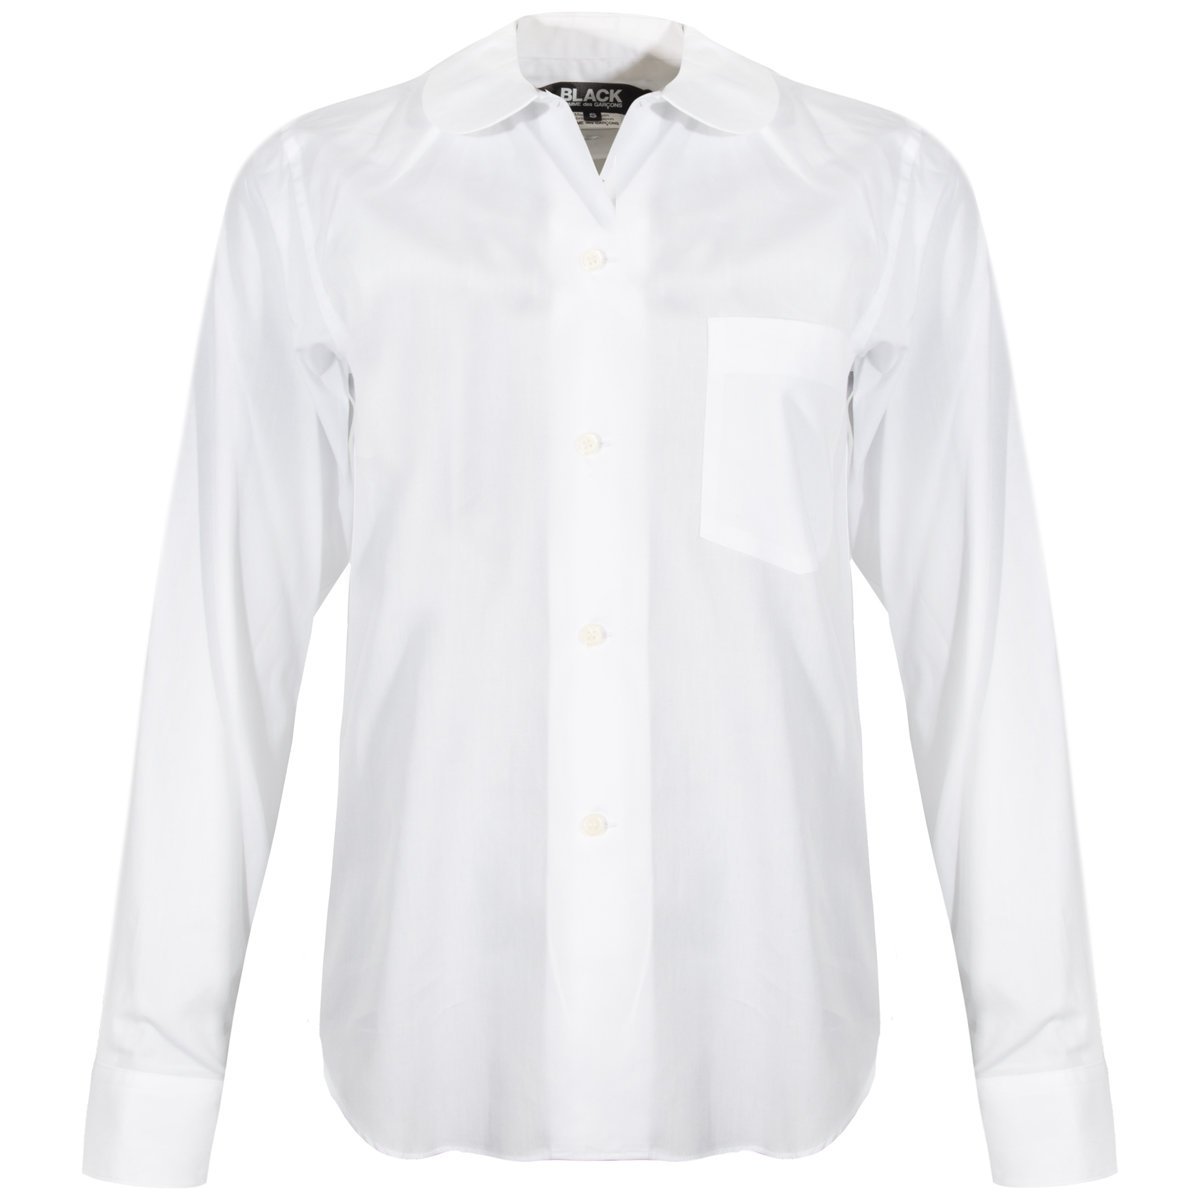 Rounded Collar Shirt White S White